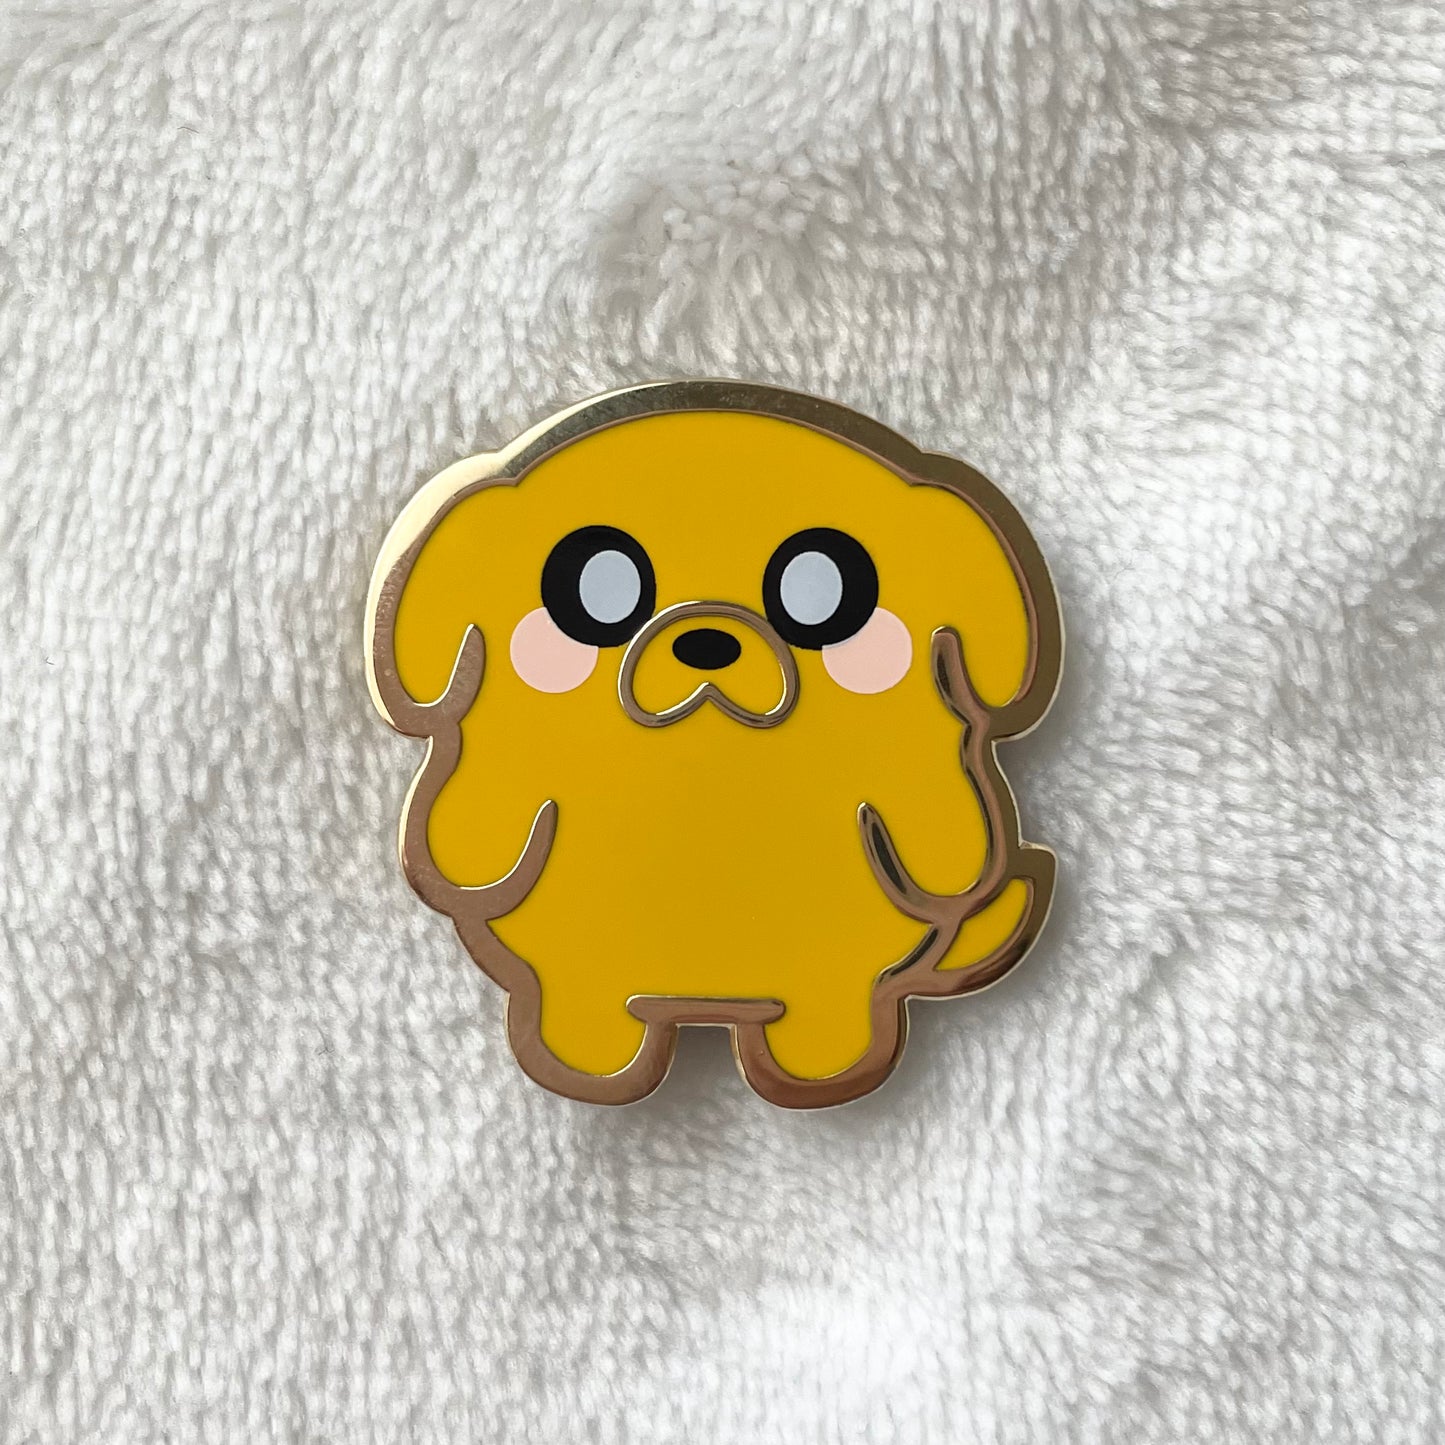 yellow dog pin